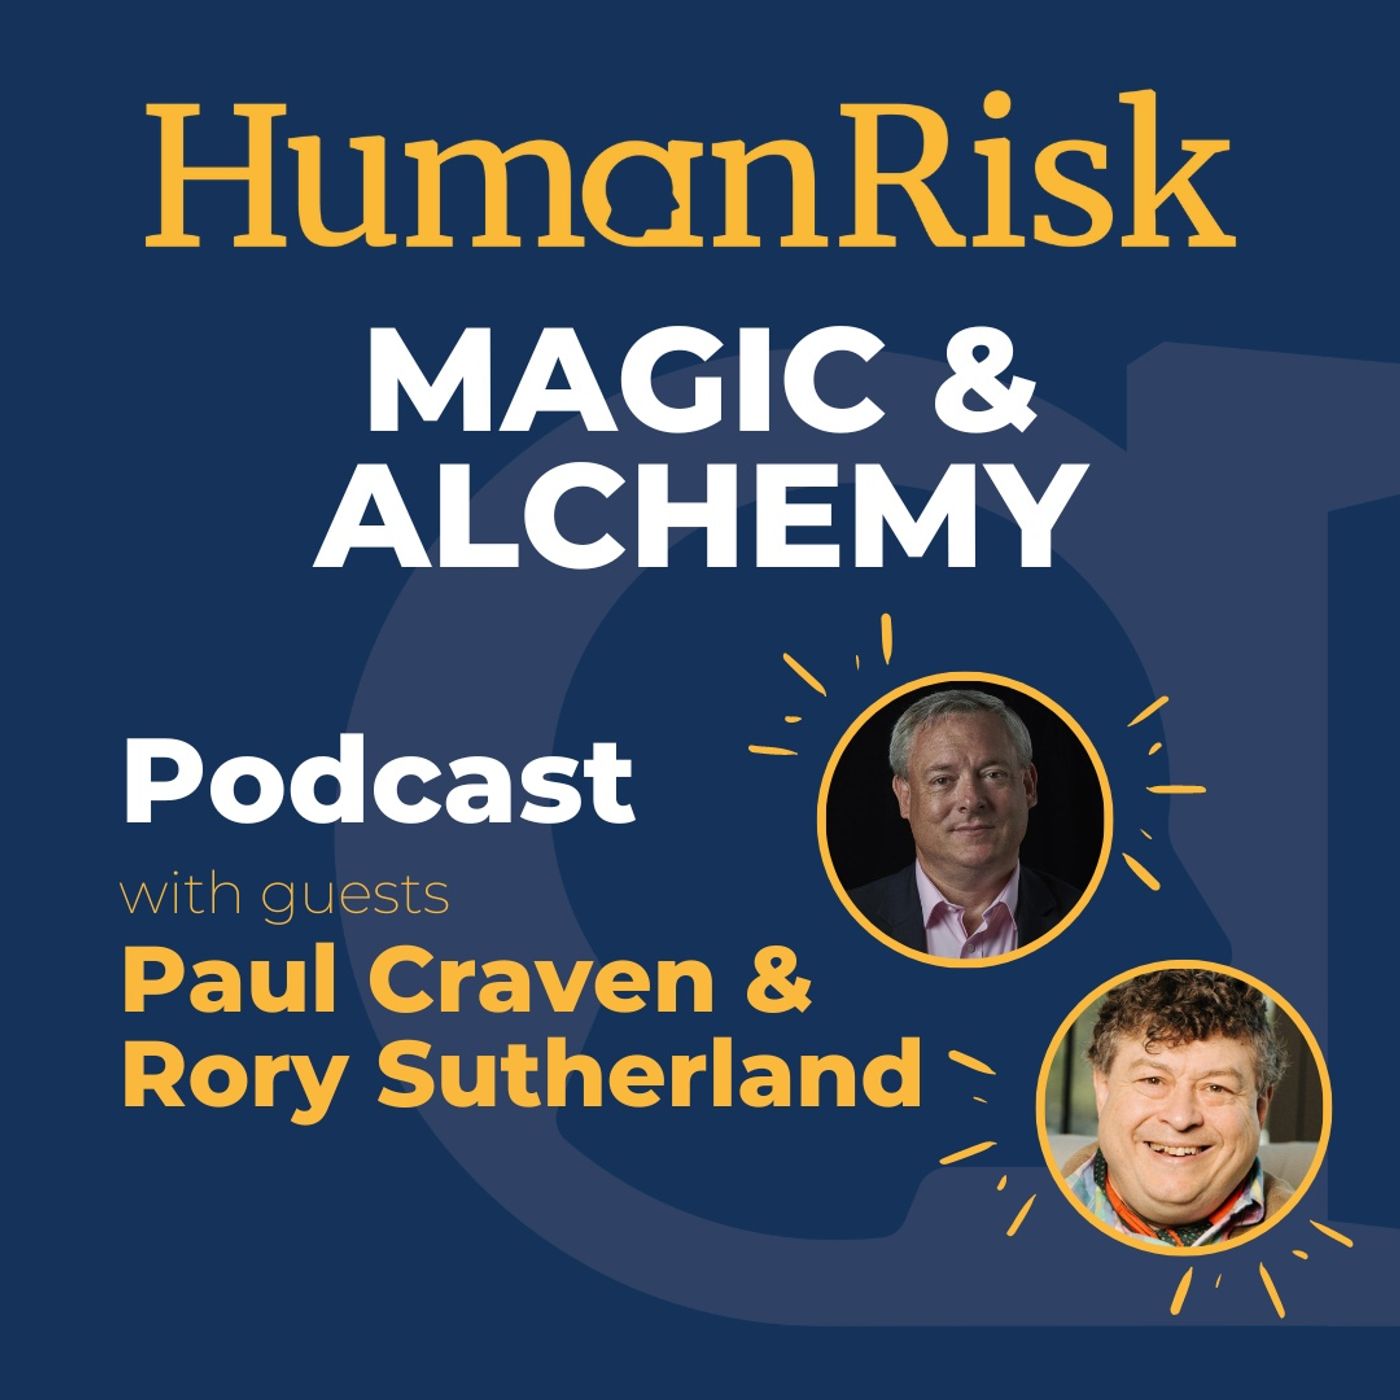 Paul Craven & Rory Sutherland on Magic & Alchemy Image